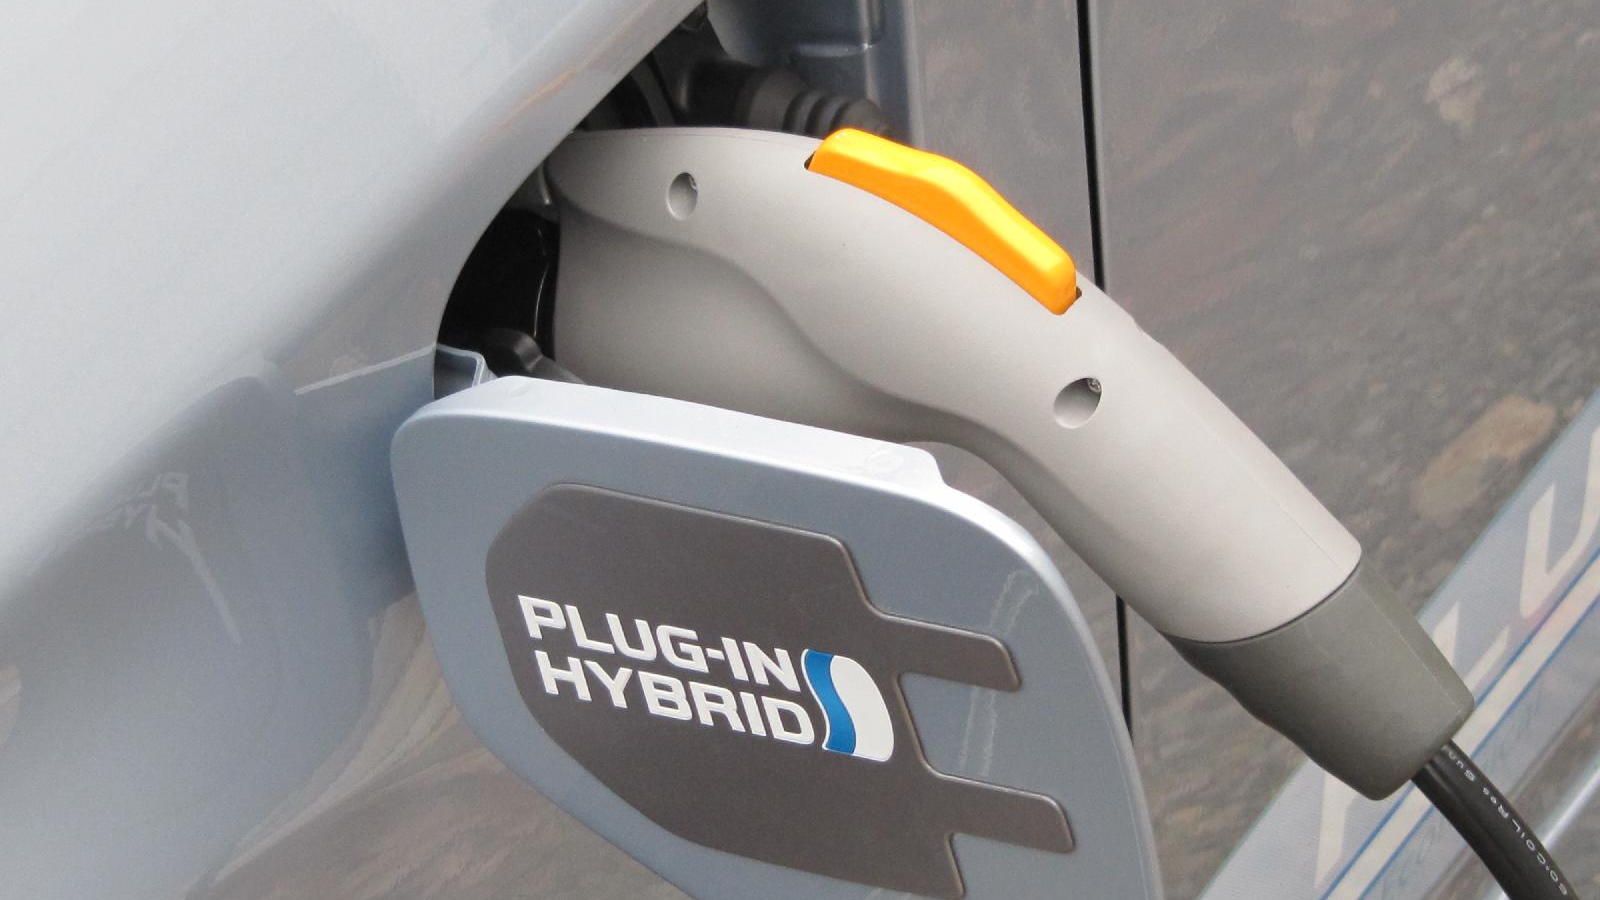 Toyota Prius Plug-In Hybrid prototype, tested in November 2010